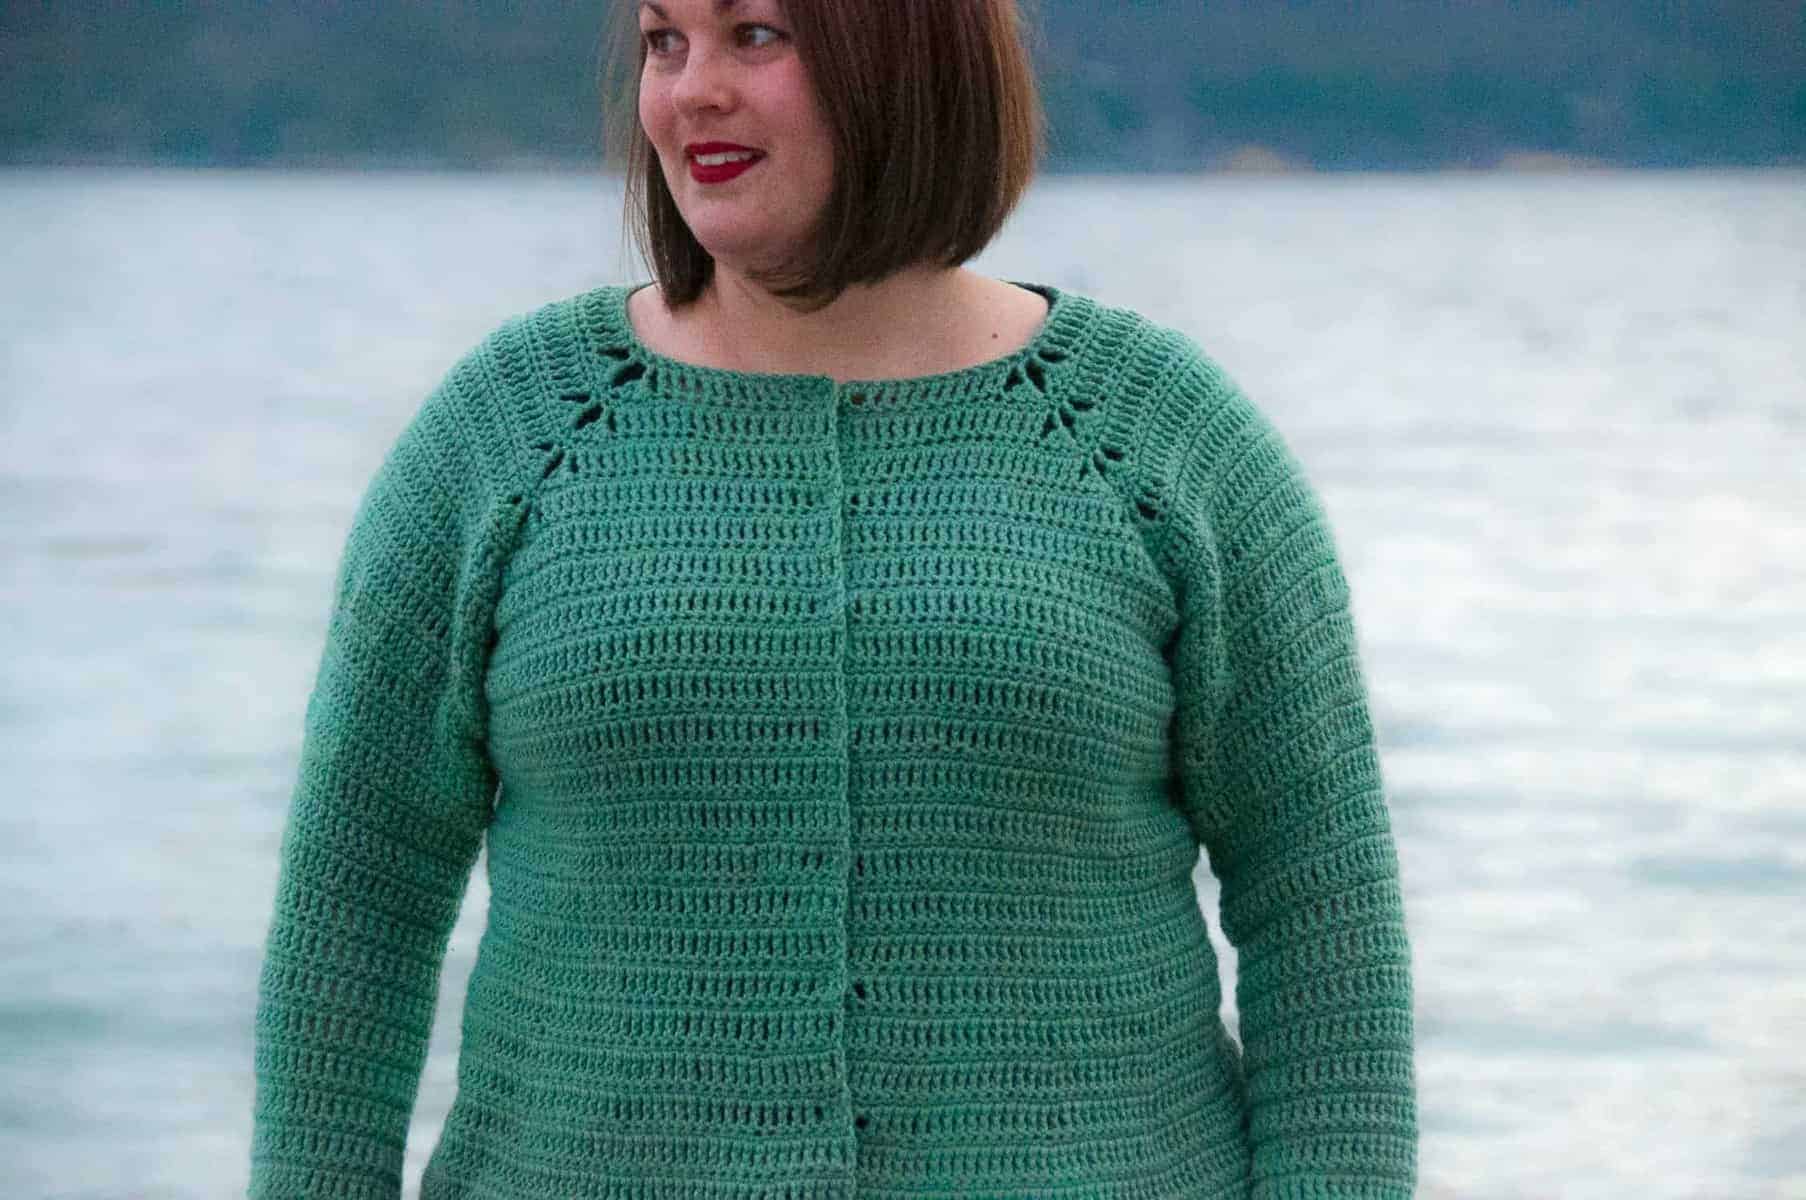 crochet Ver cardigan free crochet pattern, crochet plus size, regular size and petite size crochet cardigan modeled